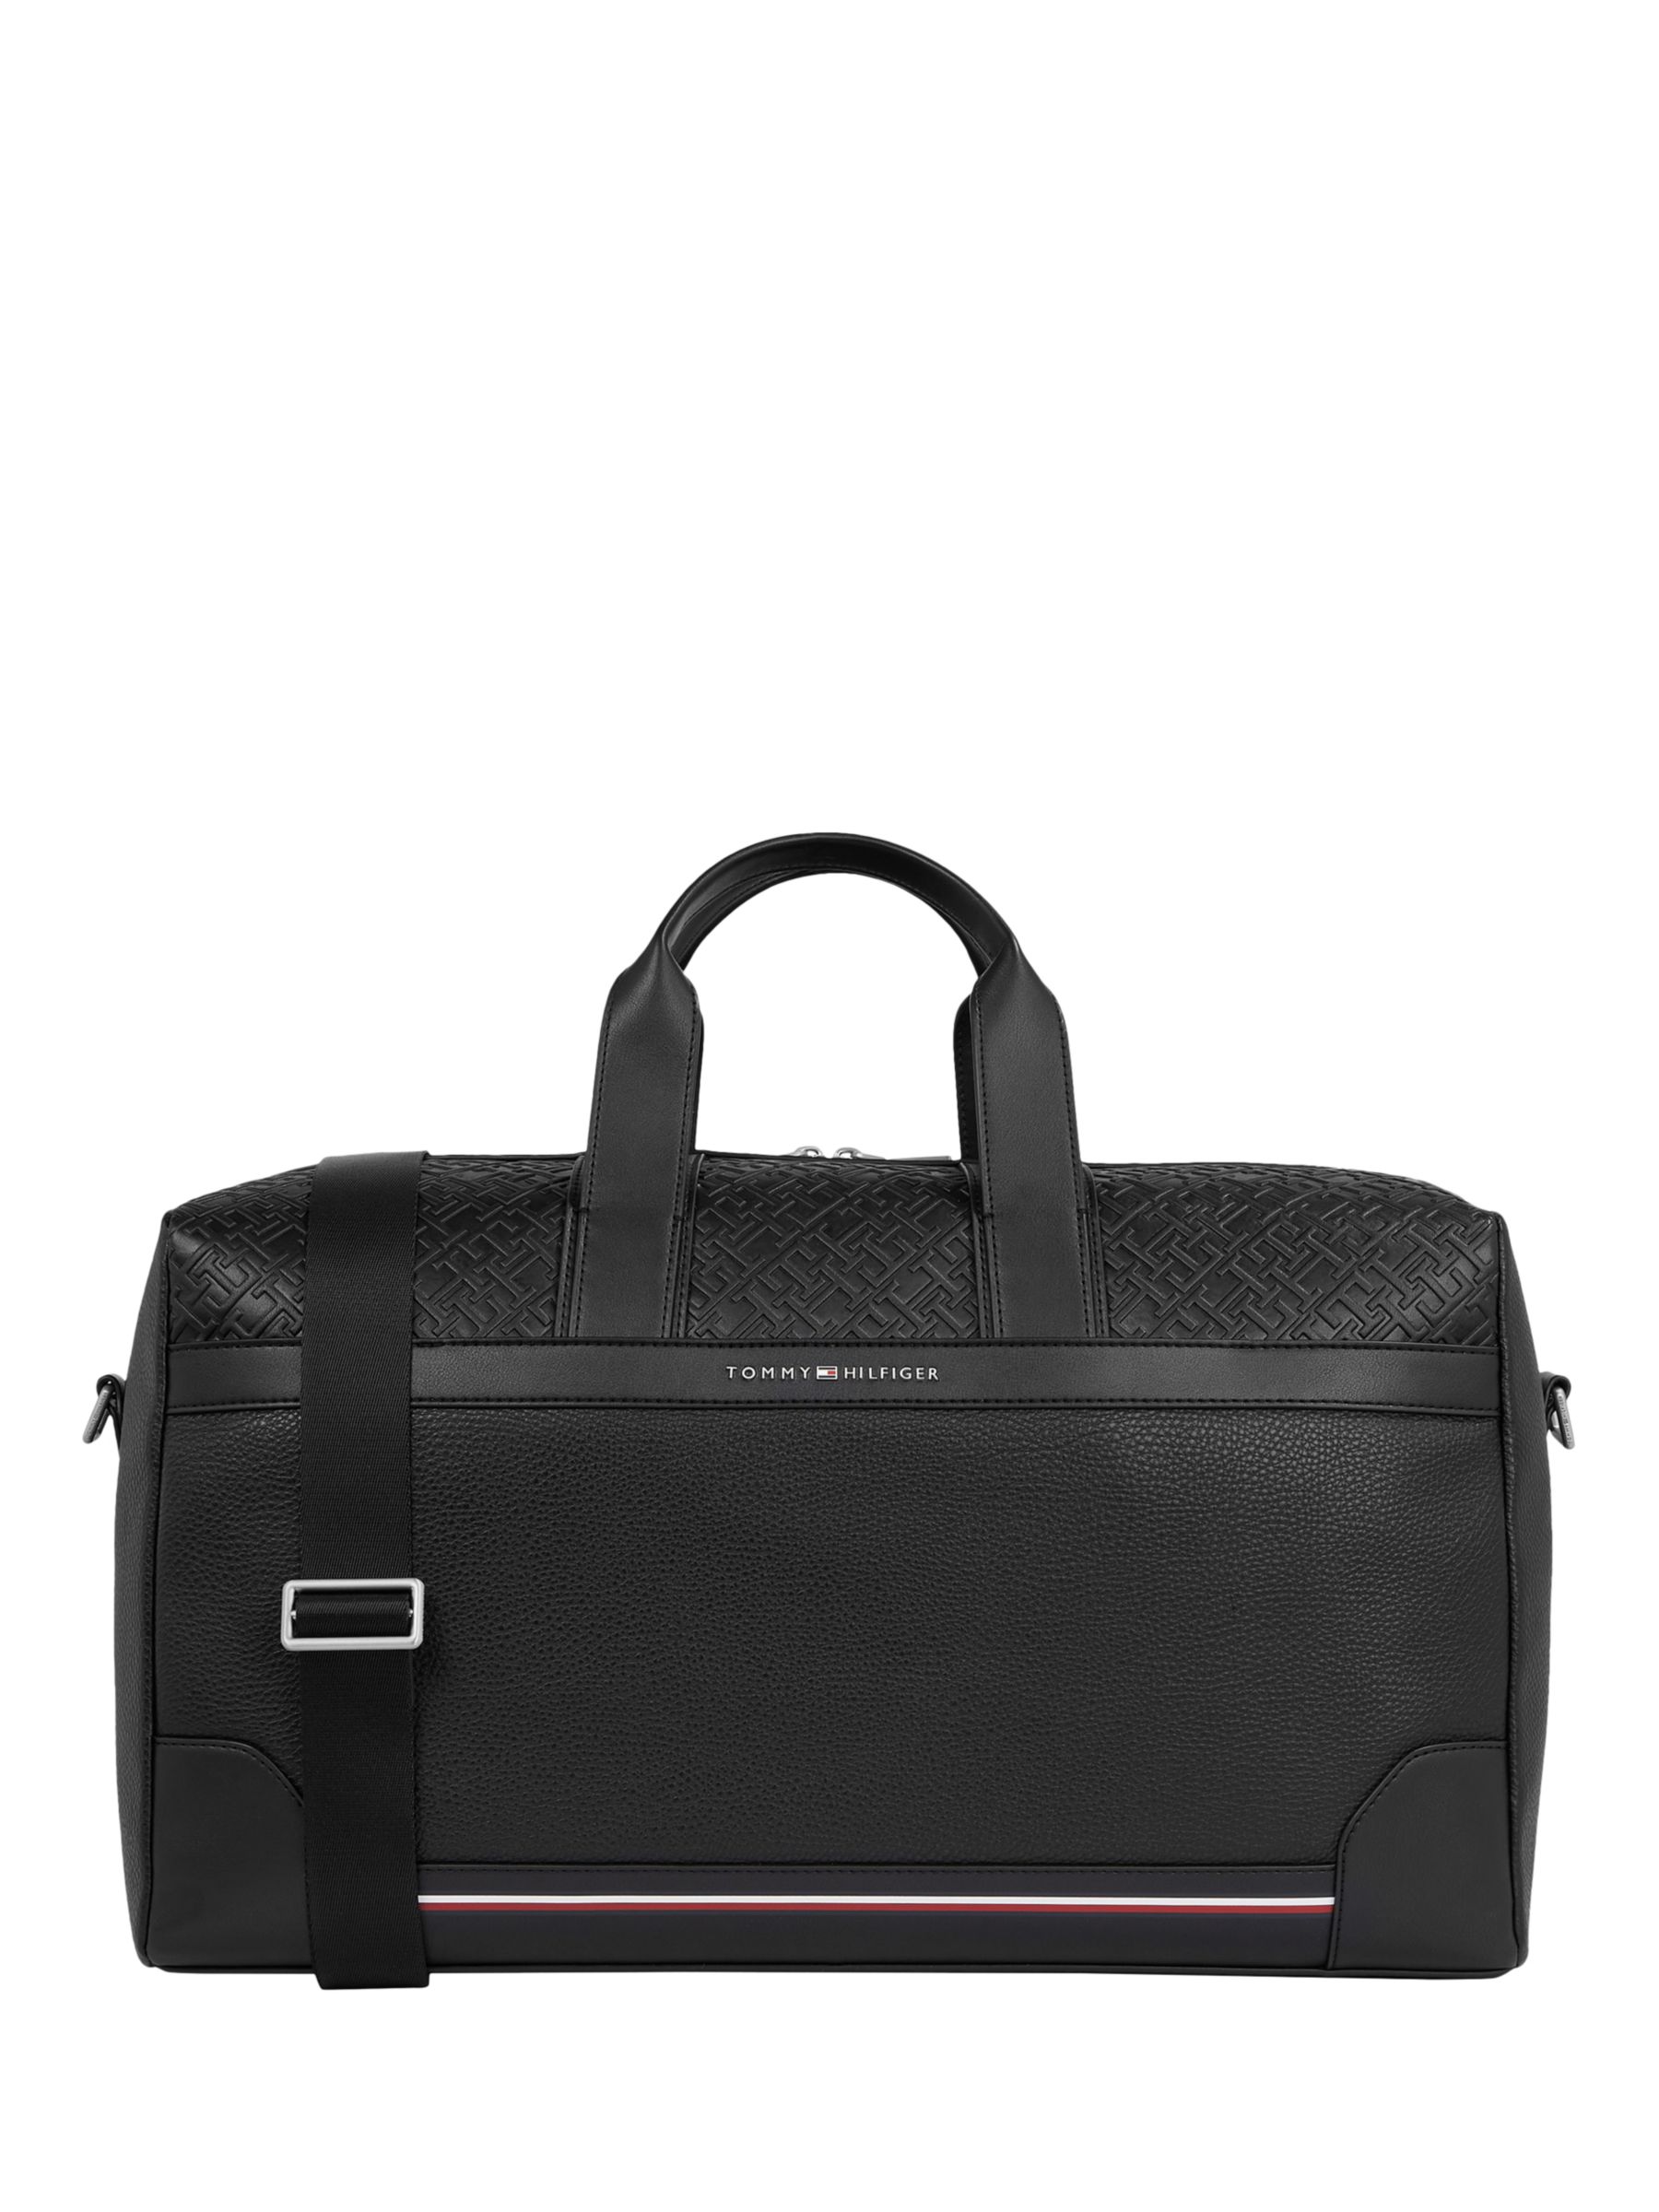 Tommy Hilfiger Central Duffle Bag, Black at John Lewis & Partners